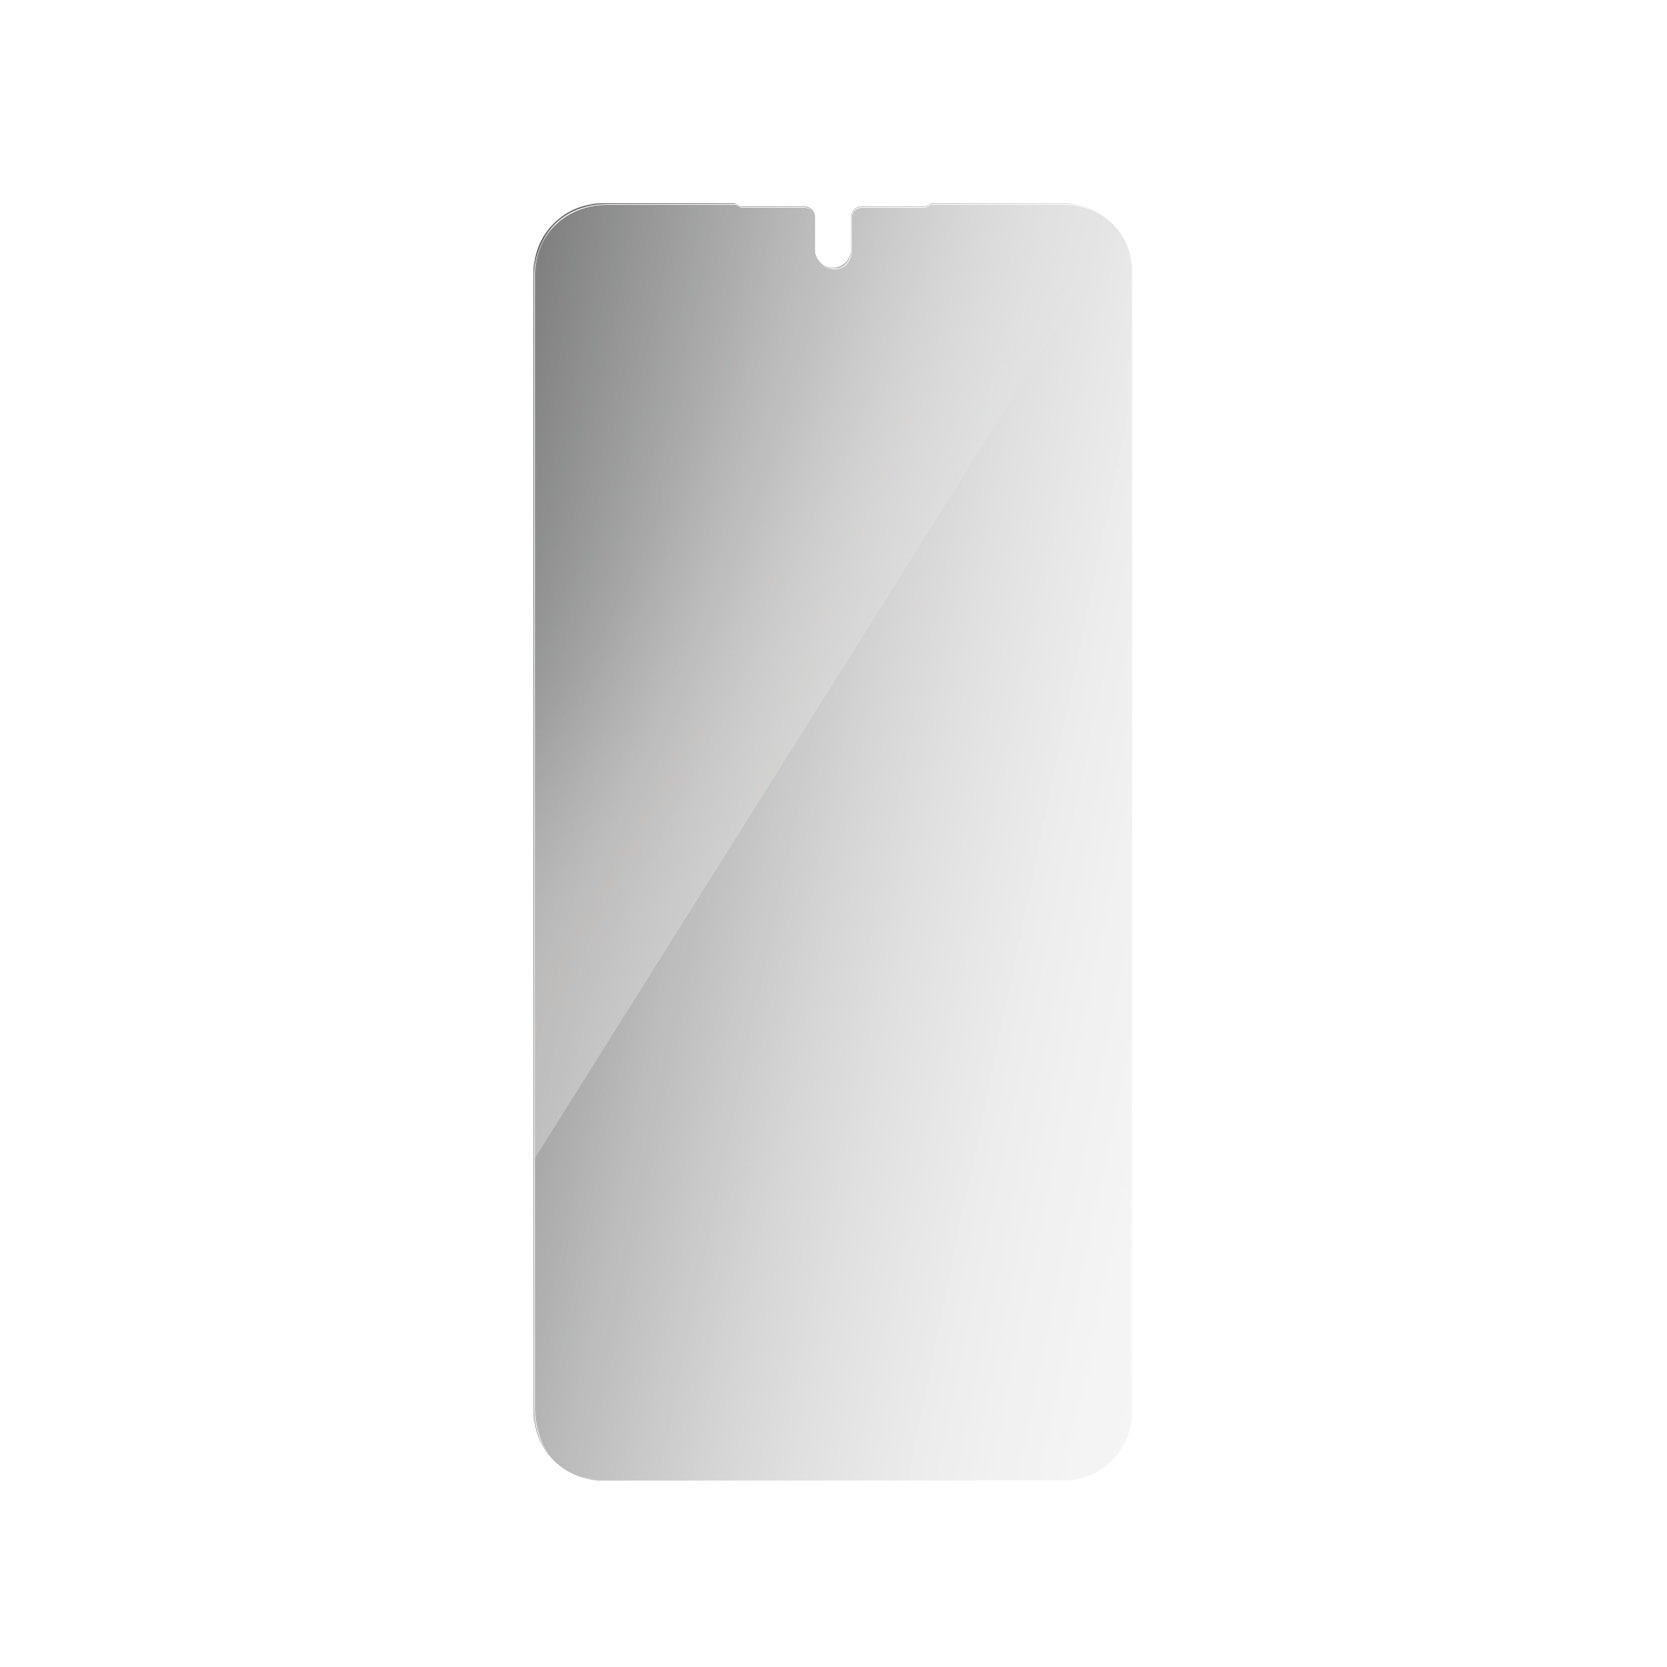 PanzerGlass Displayschutzglas »Ultra Wide Fit Privacy Screen Protector«, für Samsung Galaxy A35 5G, Blickschutz Displayschutzfolie Displayschutz Kratz-& Stoßfest